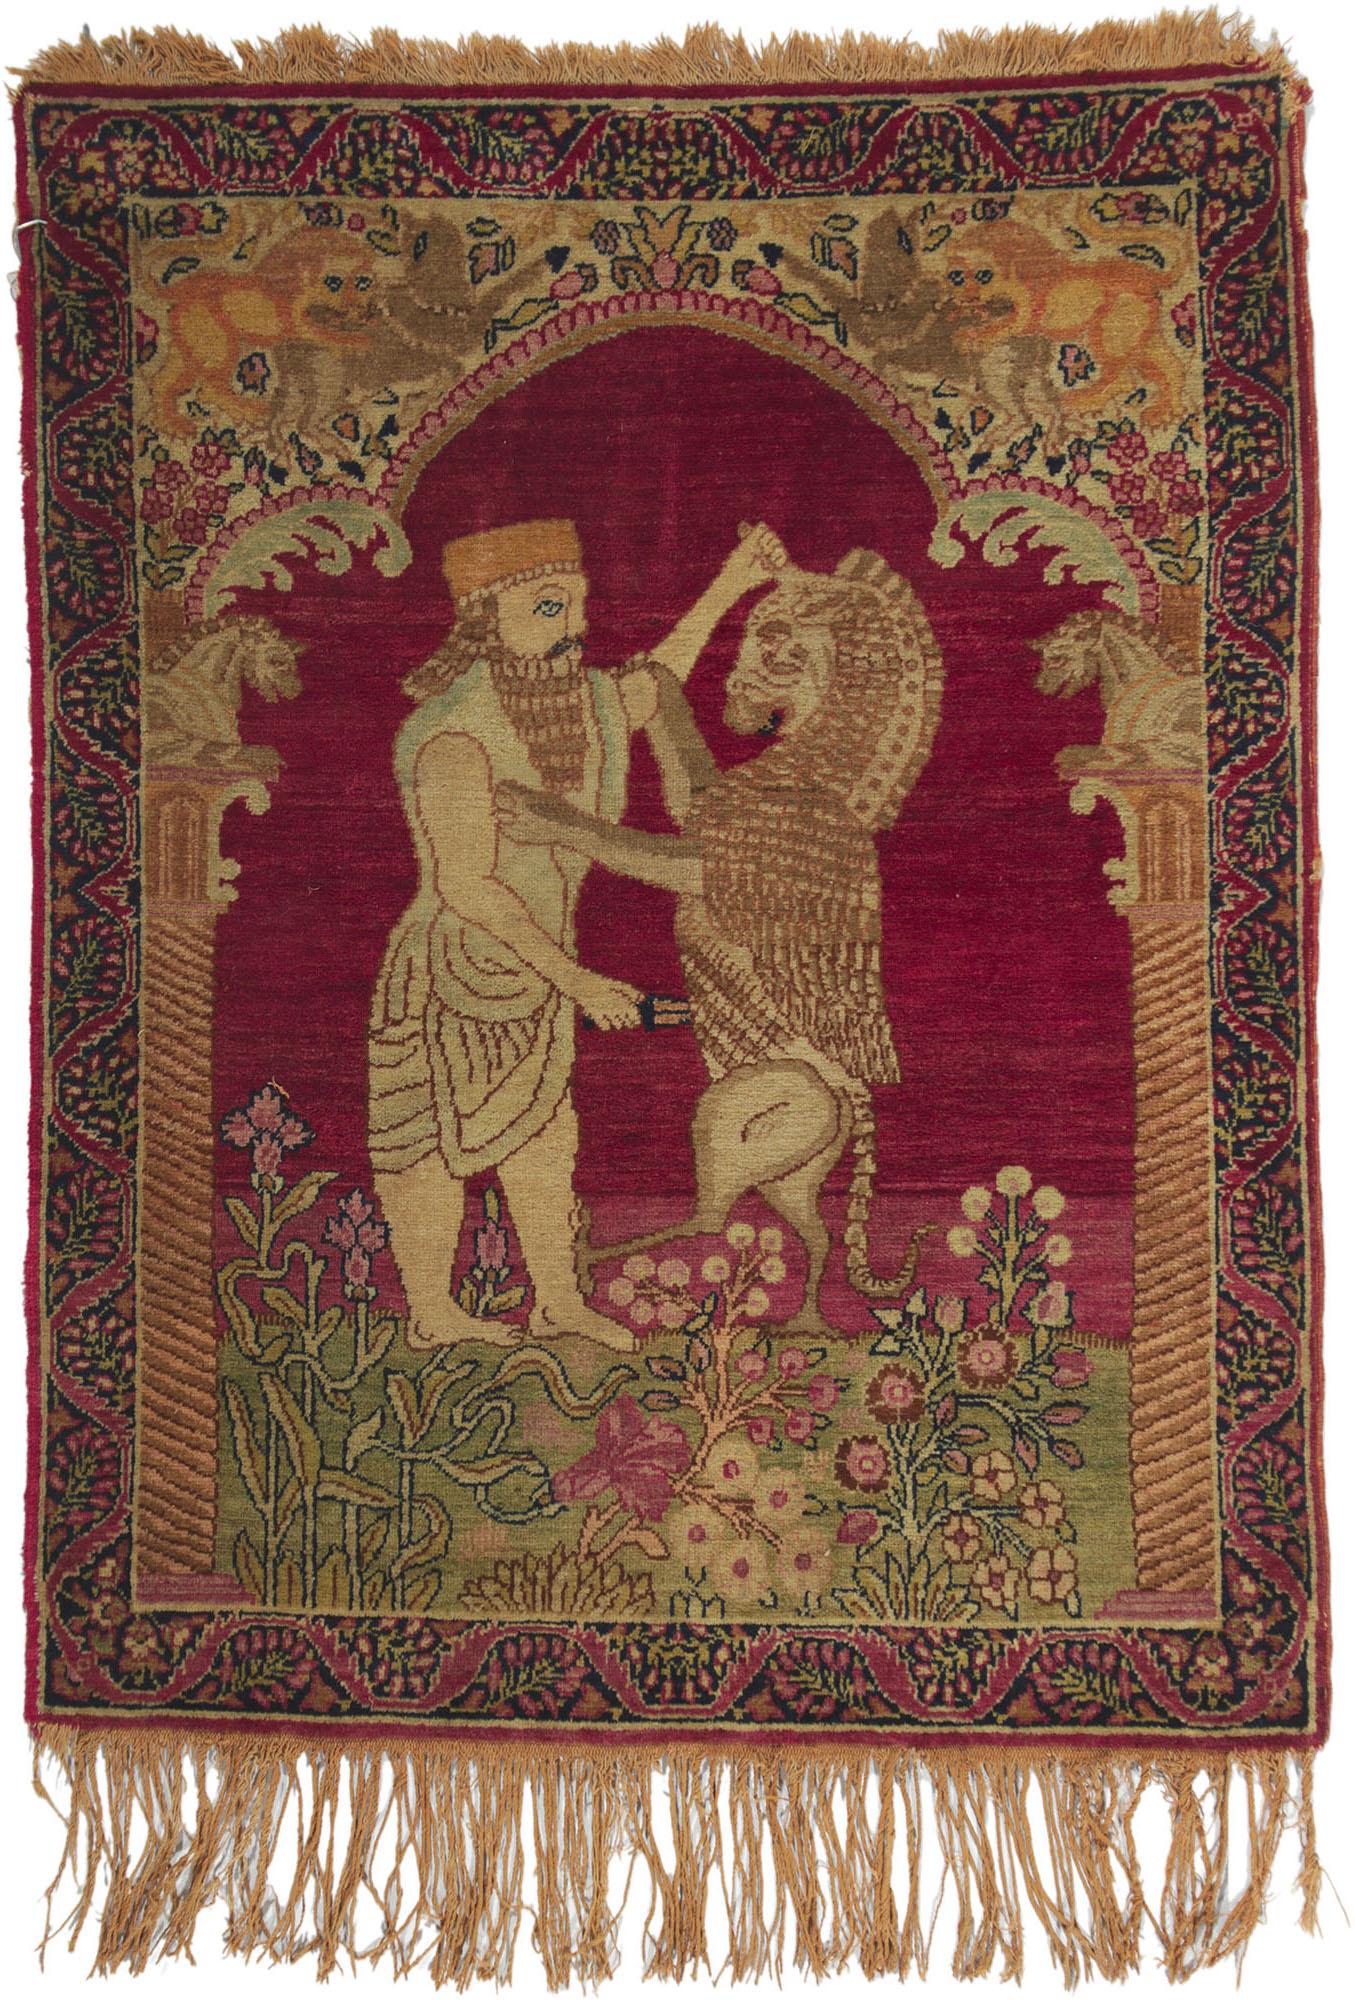 Antique Kerman Pictorial Rug Lion & King Darius Achaemenid Mythological Tapestry